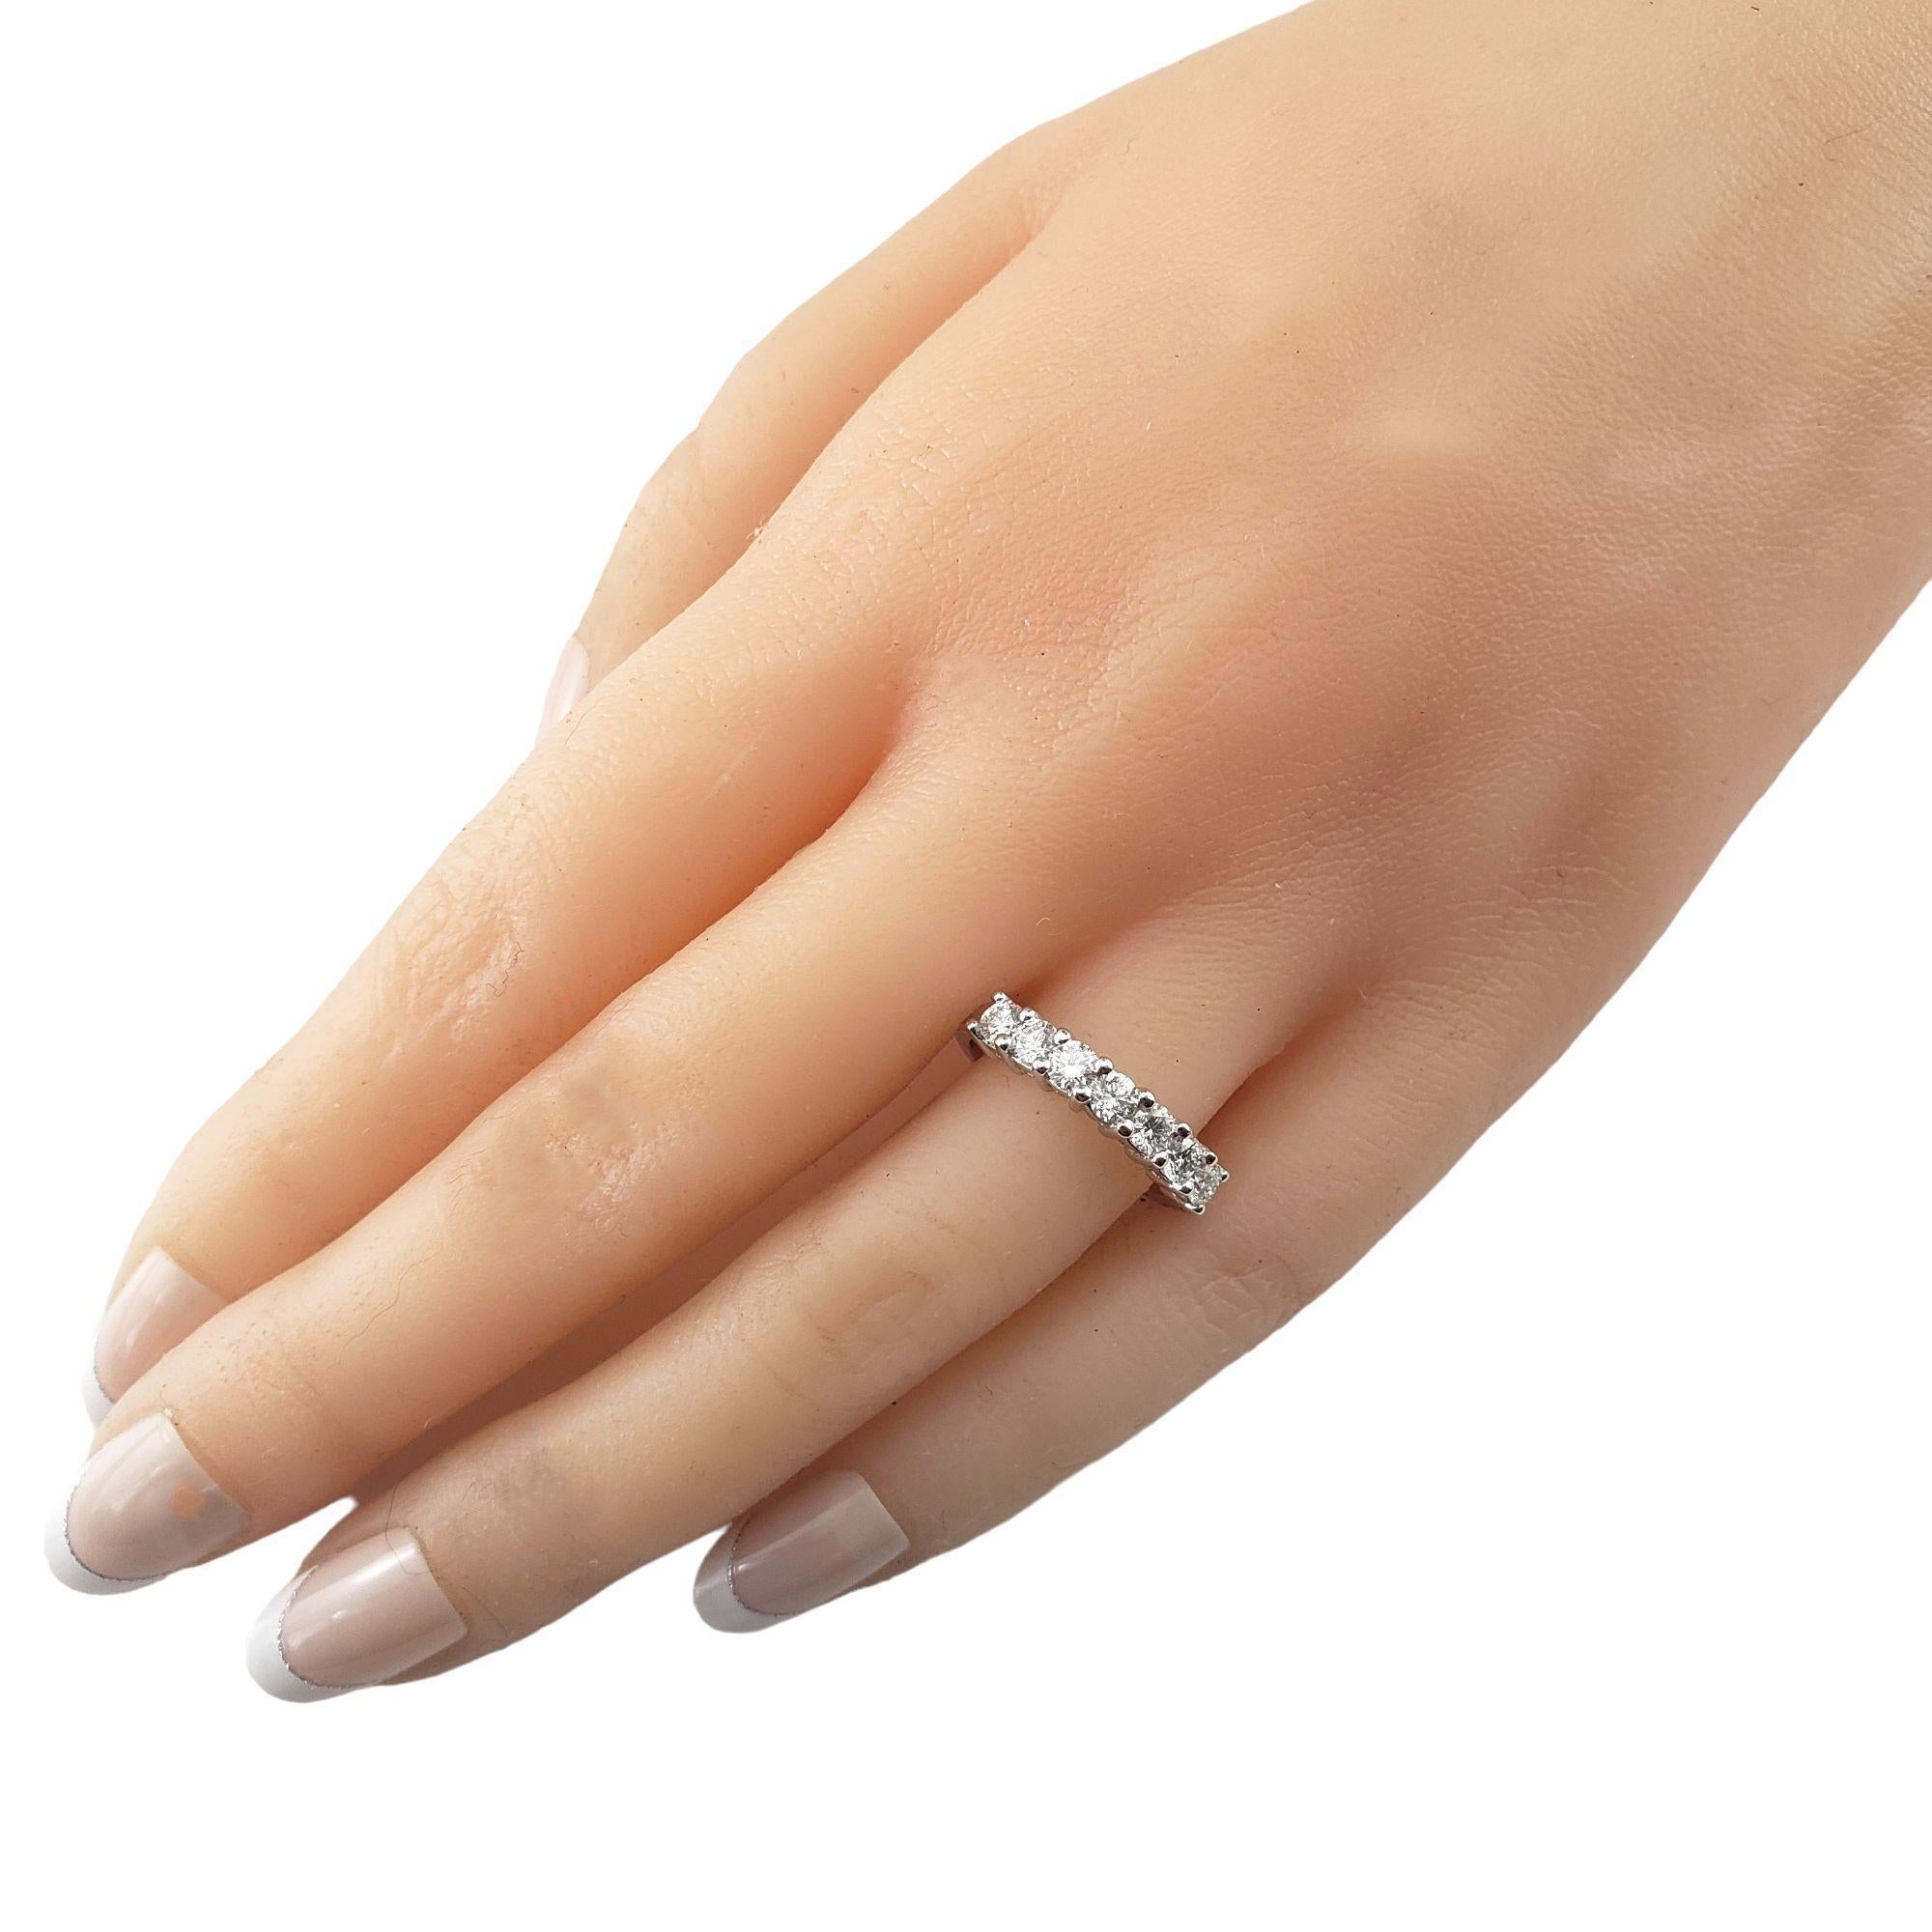 Women's 14K White Gold Diamond Wedding Band Ring Size 6.25 #15074 For Sale